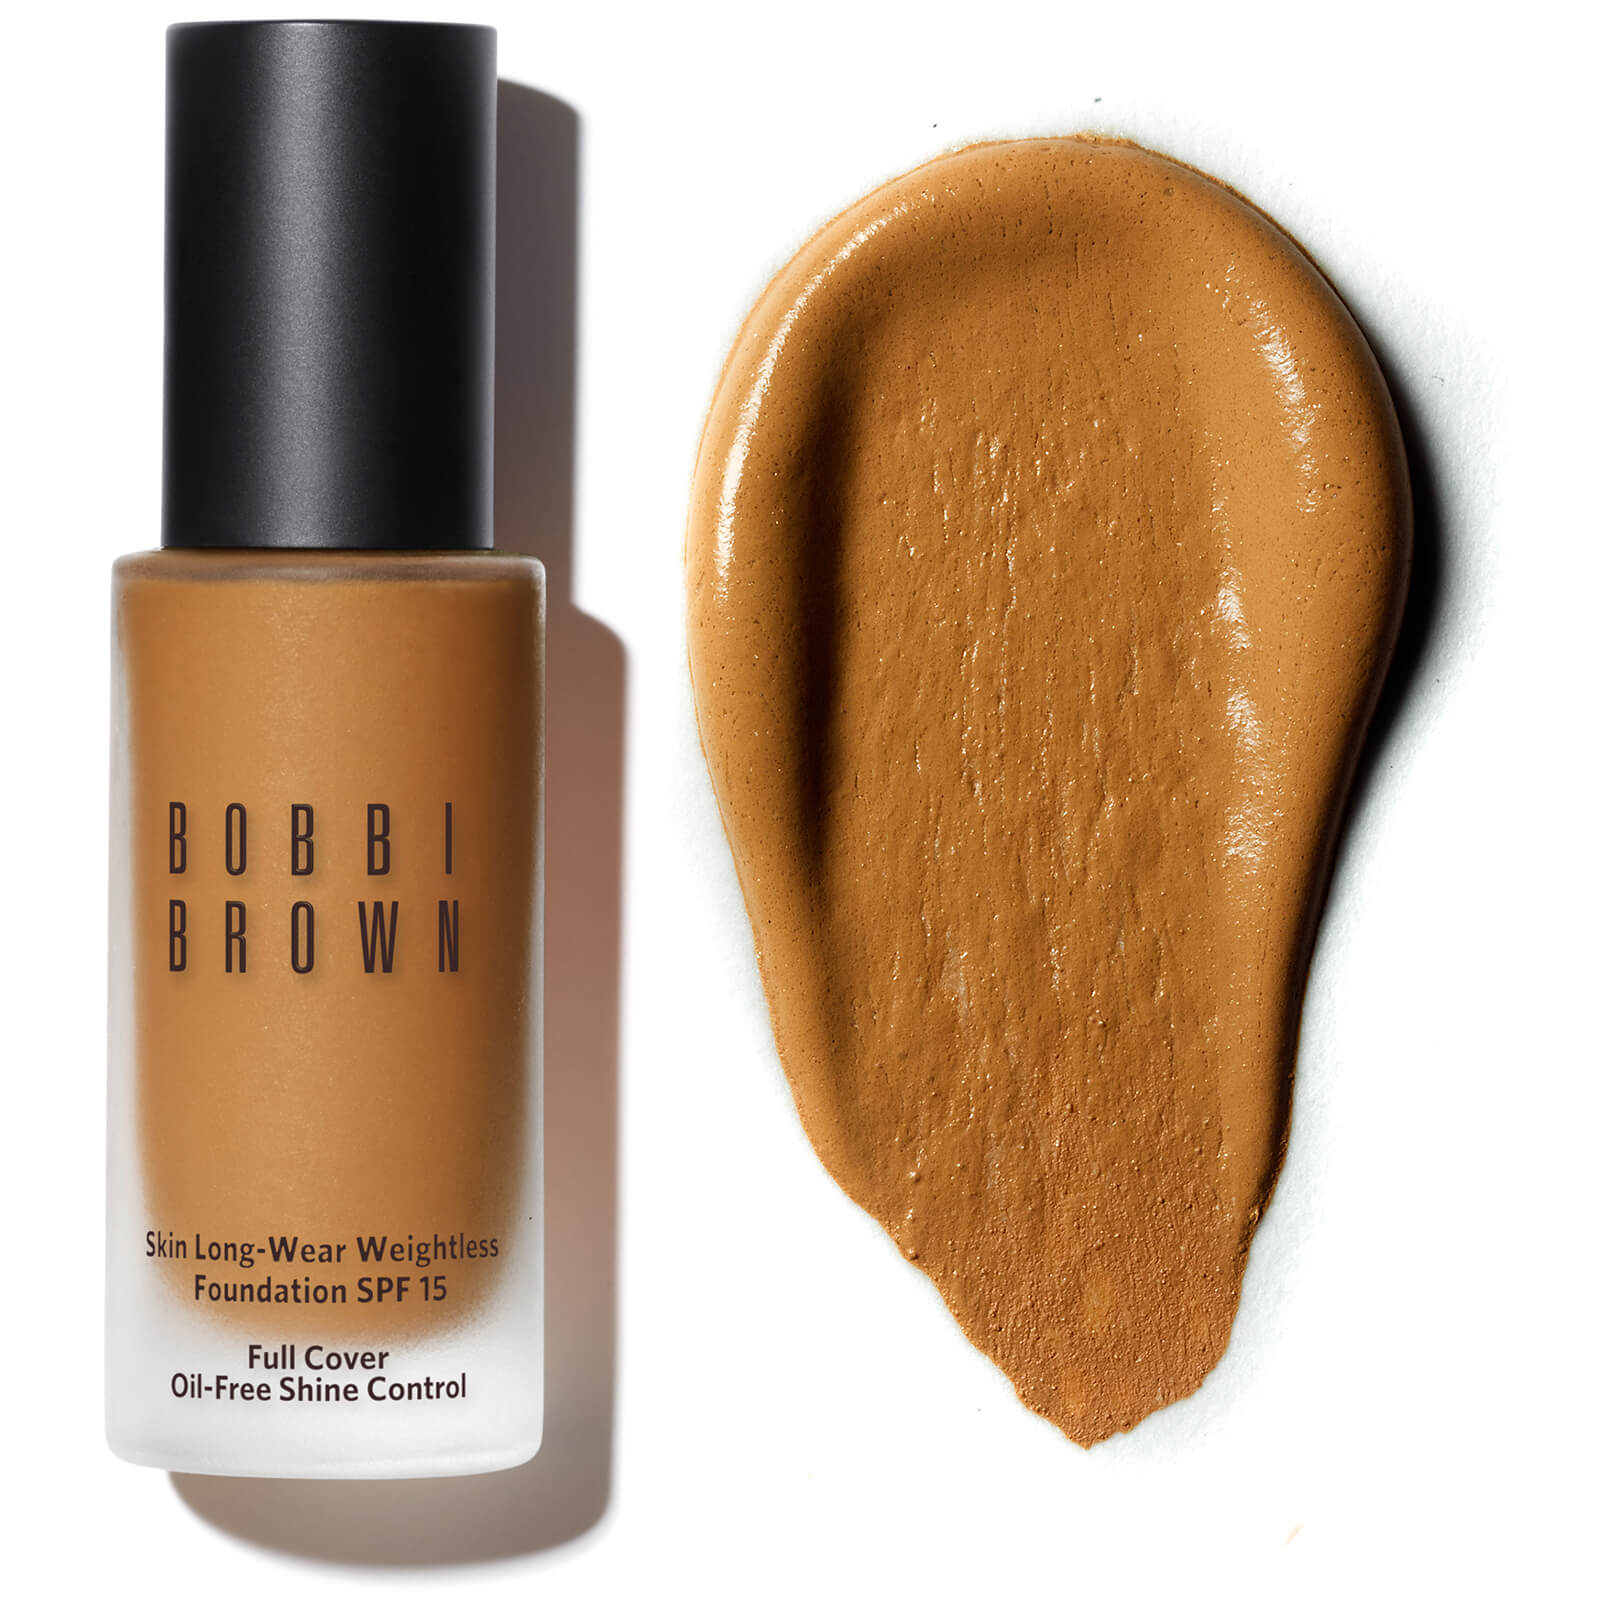 Bobbi Brown Skin Long-Wear Weightless Foundation SPF15 (Various Shades) - Warm Honey